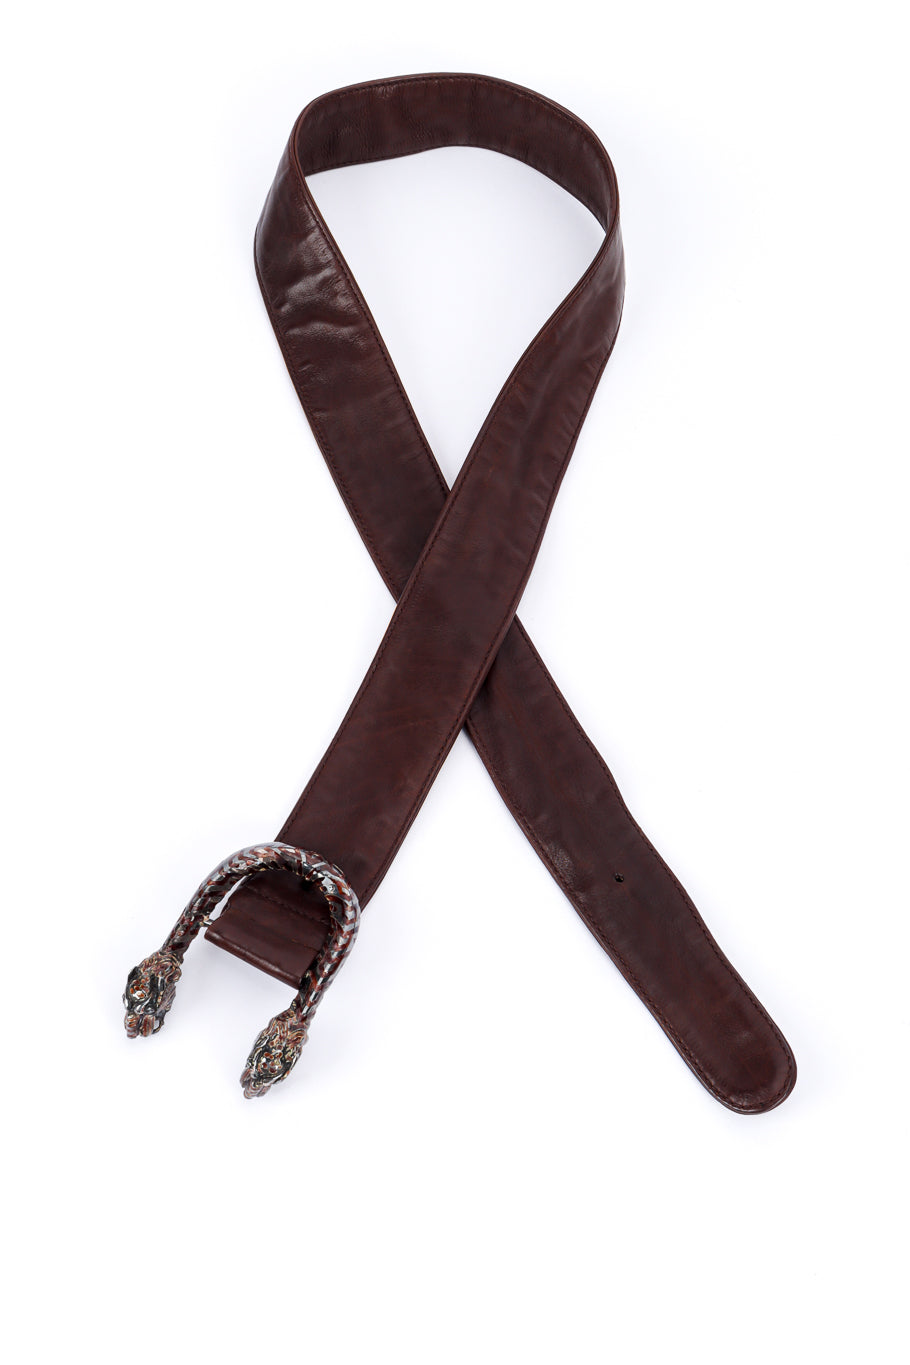 Vintage Gucci Suede and Leather Coat belt @recessla